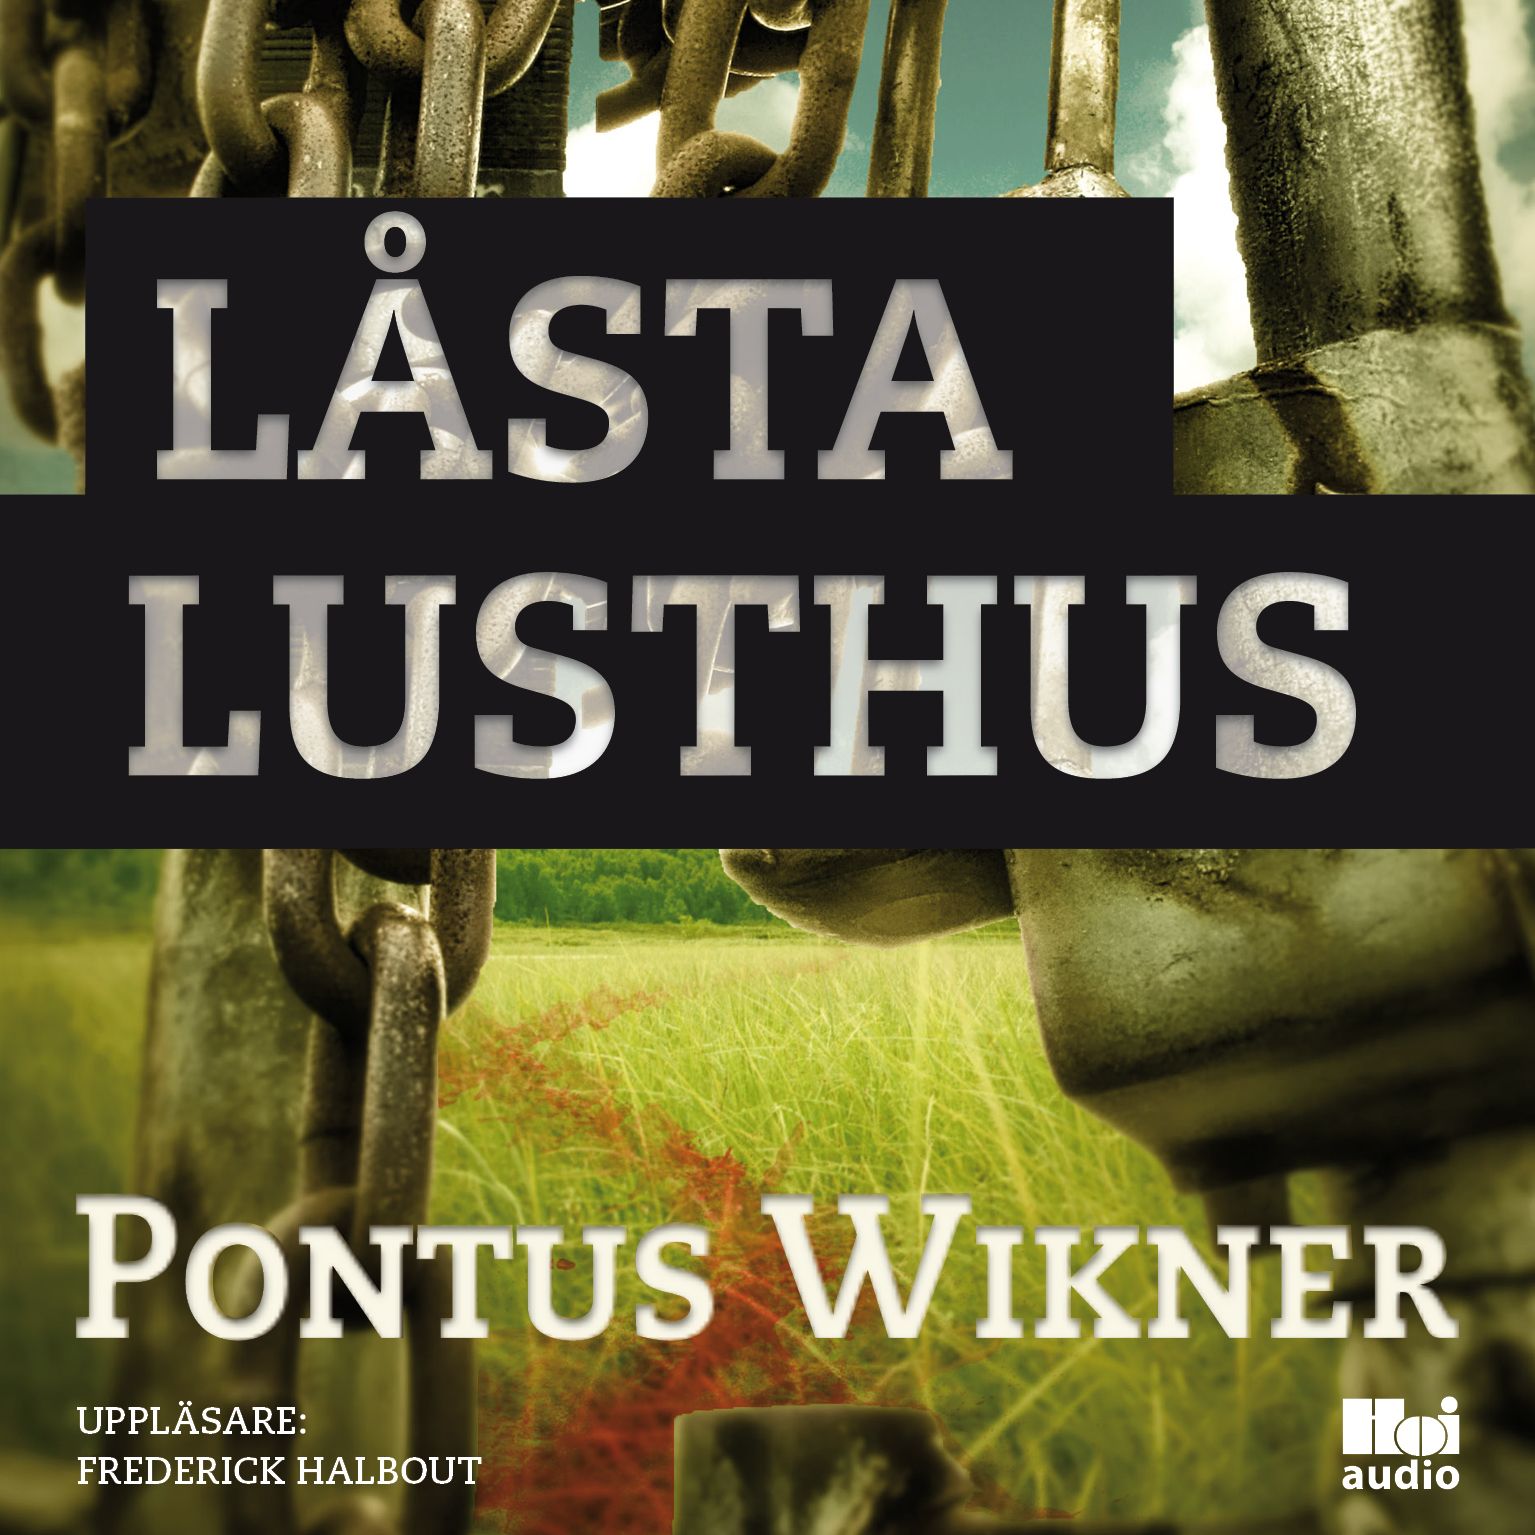 Låsta lusthus, audiobook by Pontus Wikner